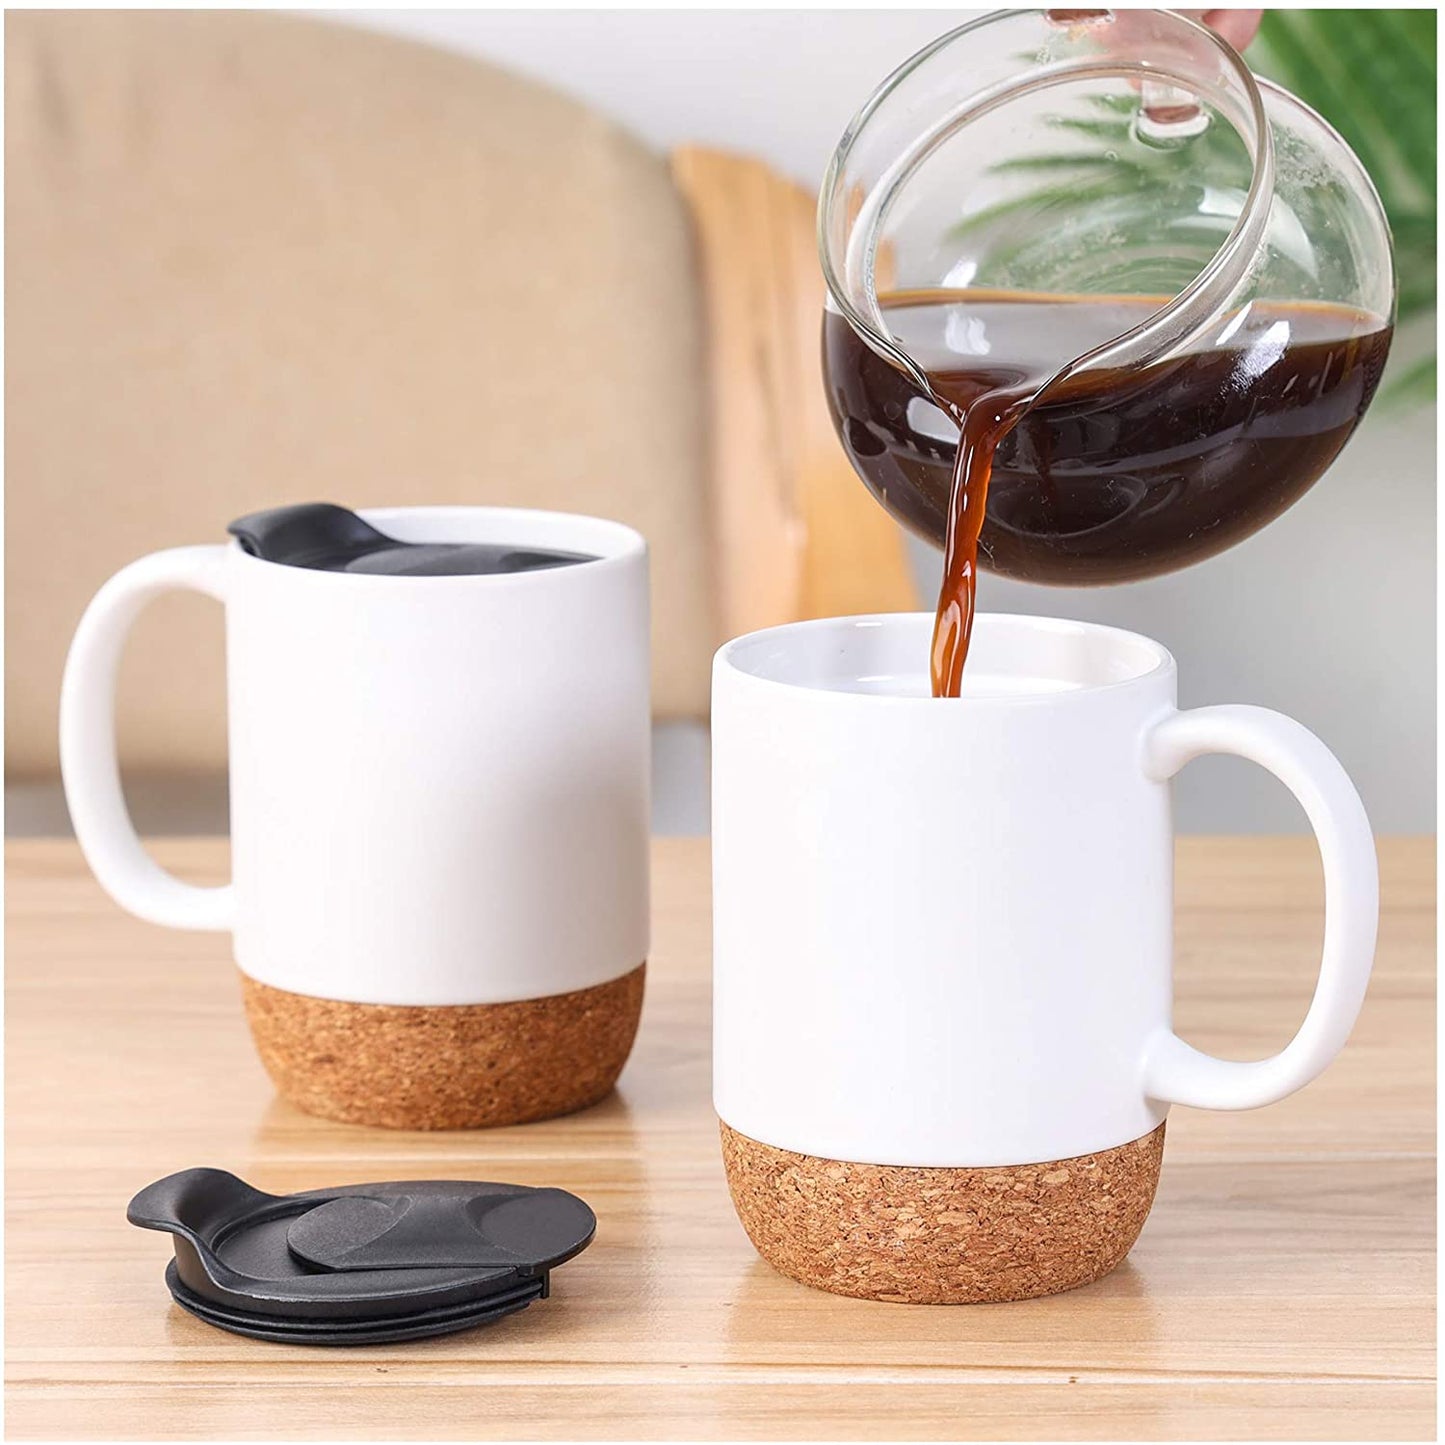 JCPL Cork Base Coffee Travel Mug with Splash Proof Lid, 340ml, 1 Piece (White)